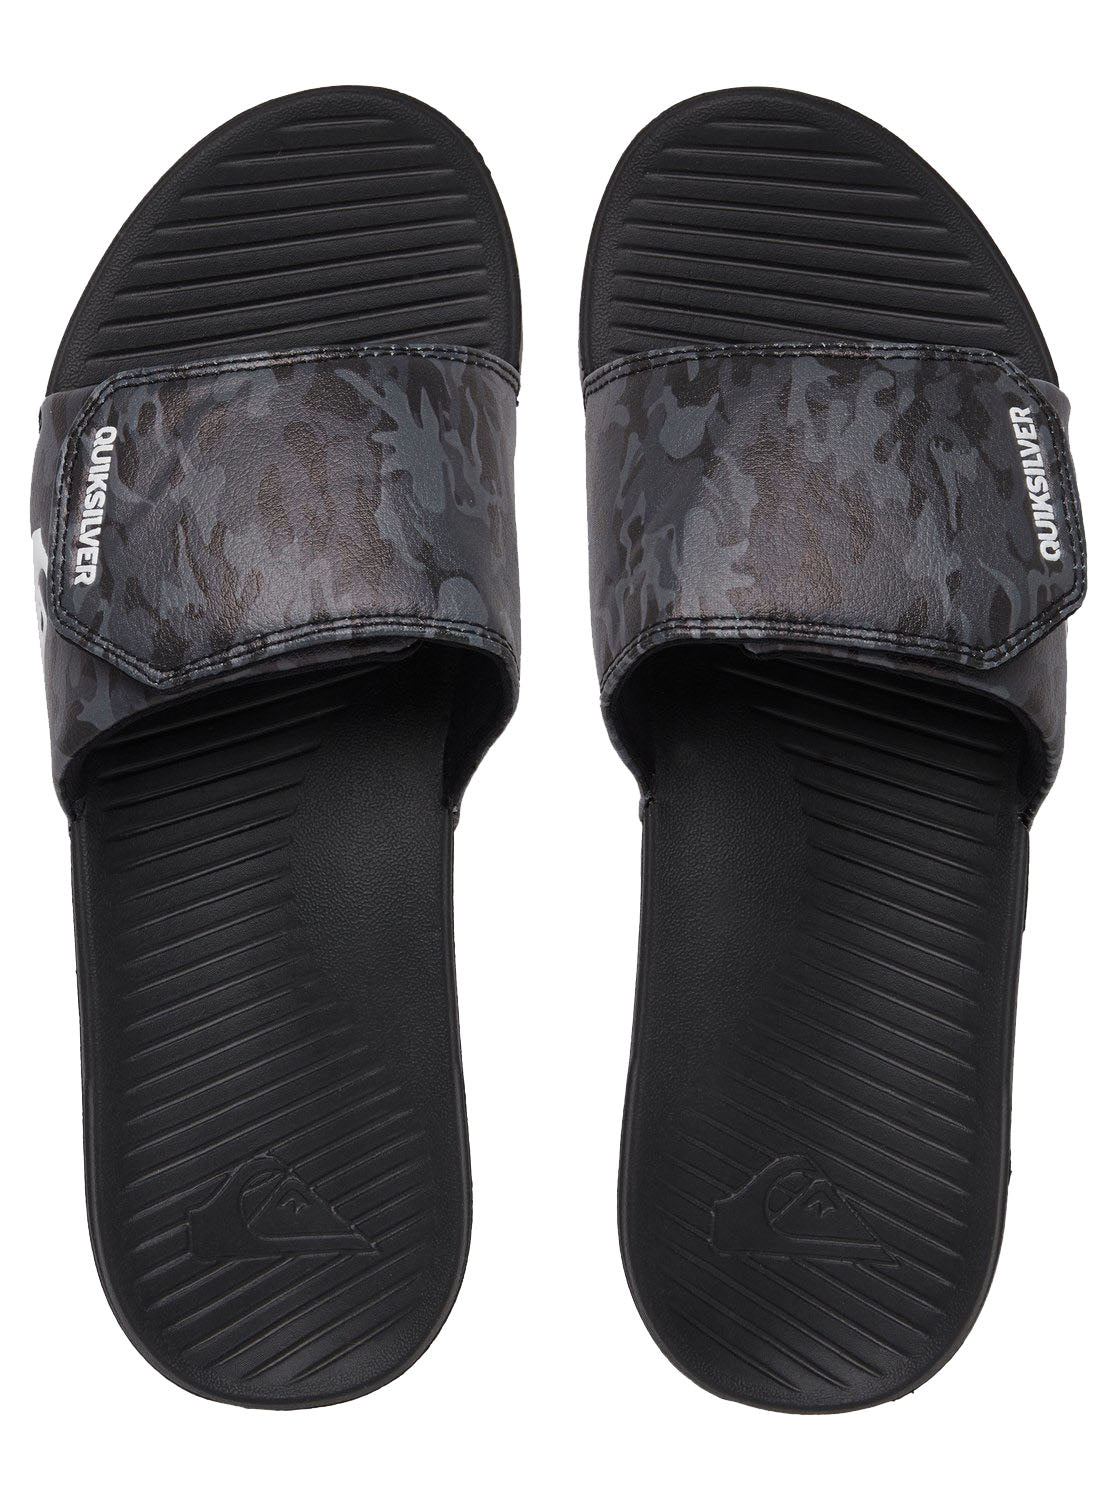 Quiksilver Bright Coast Adjust Mens Sandal XSKK-Grey-Black-Black 12